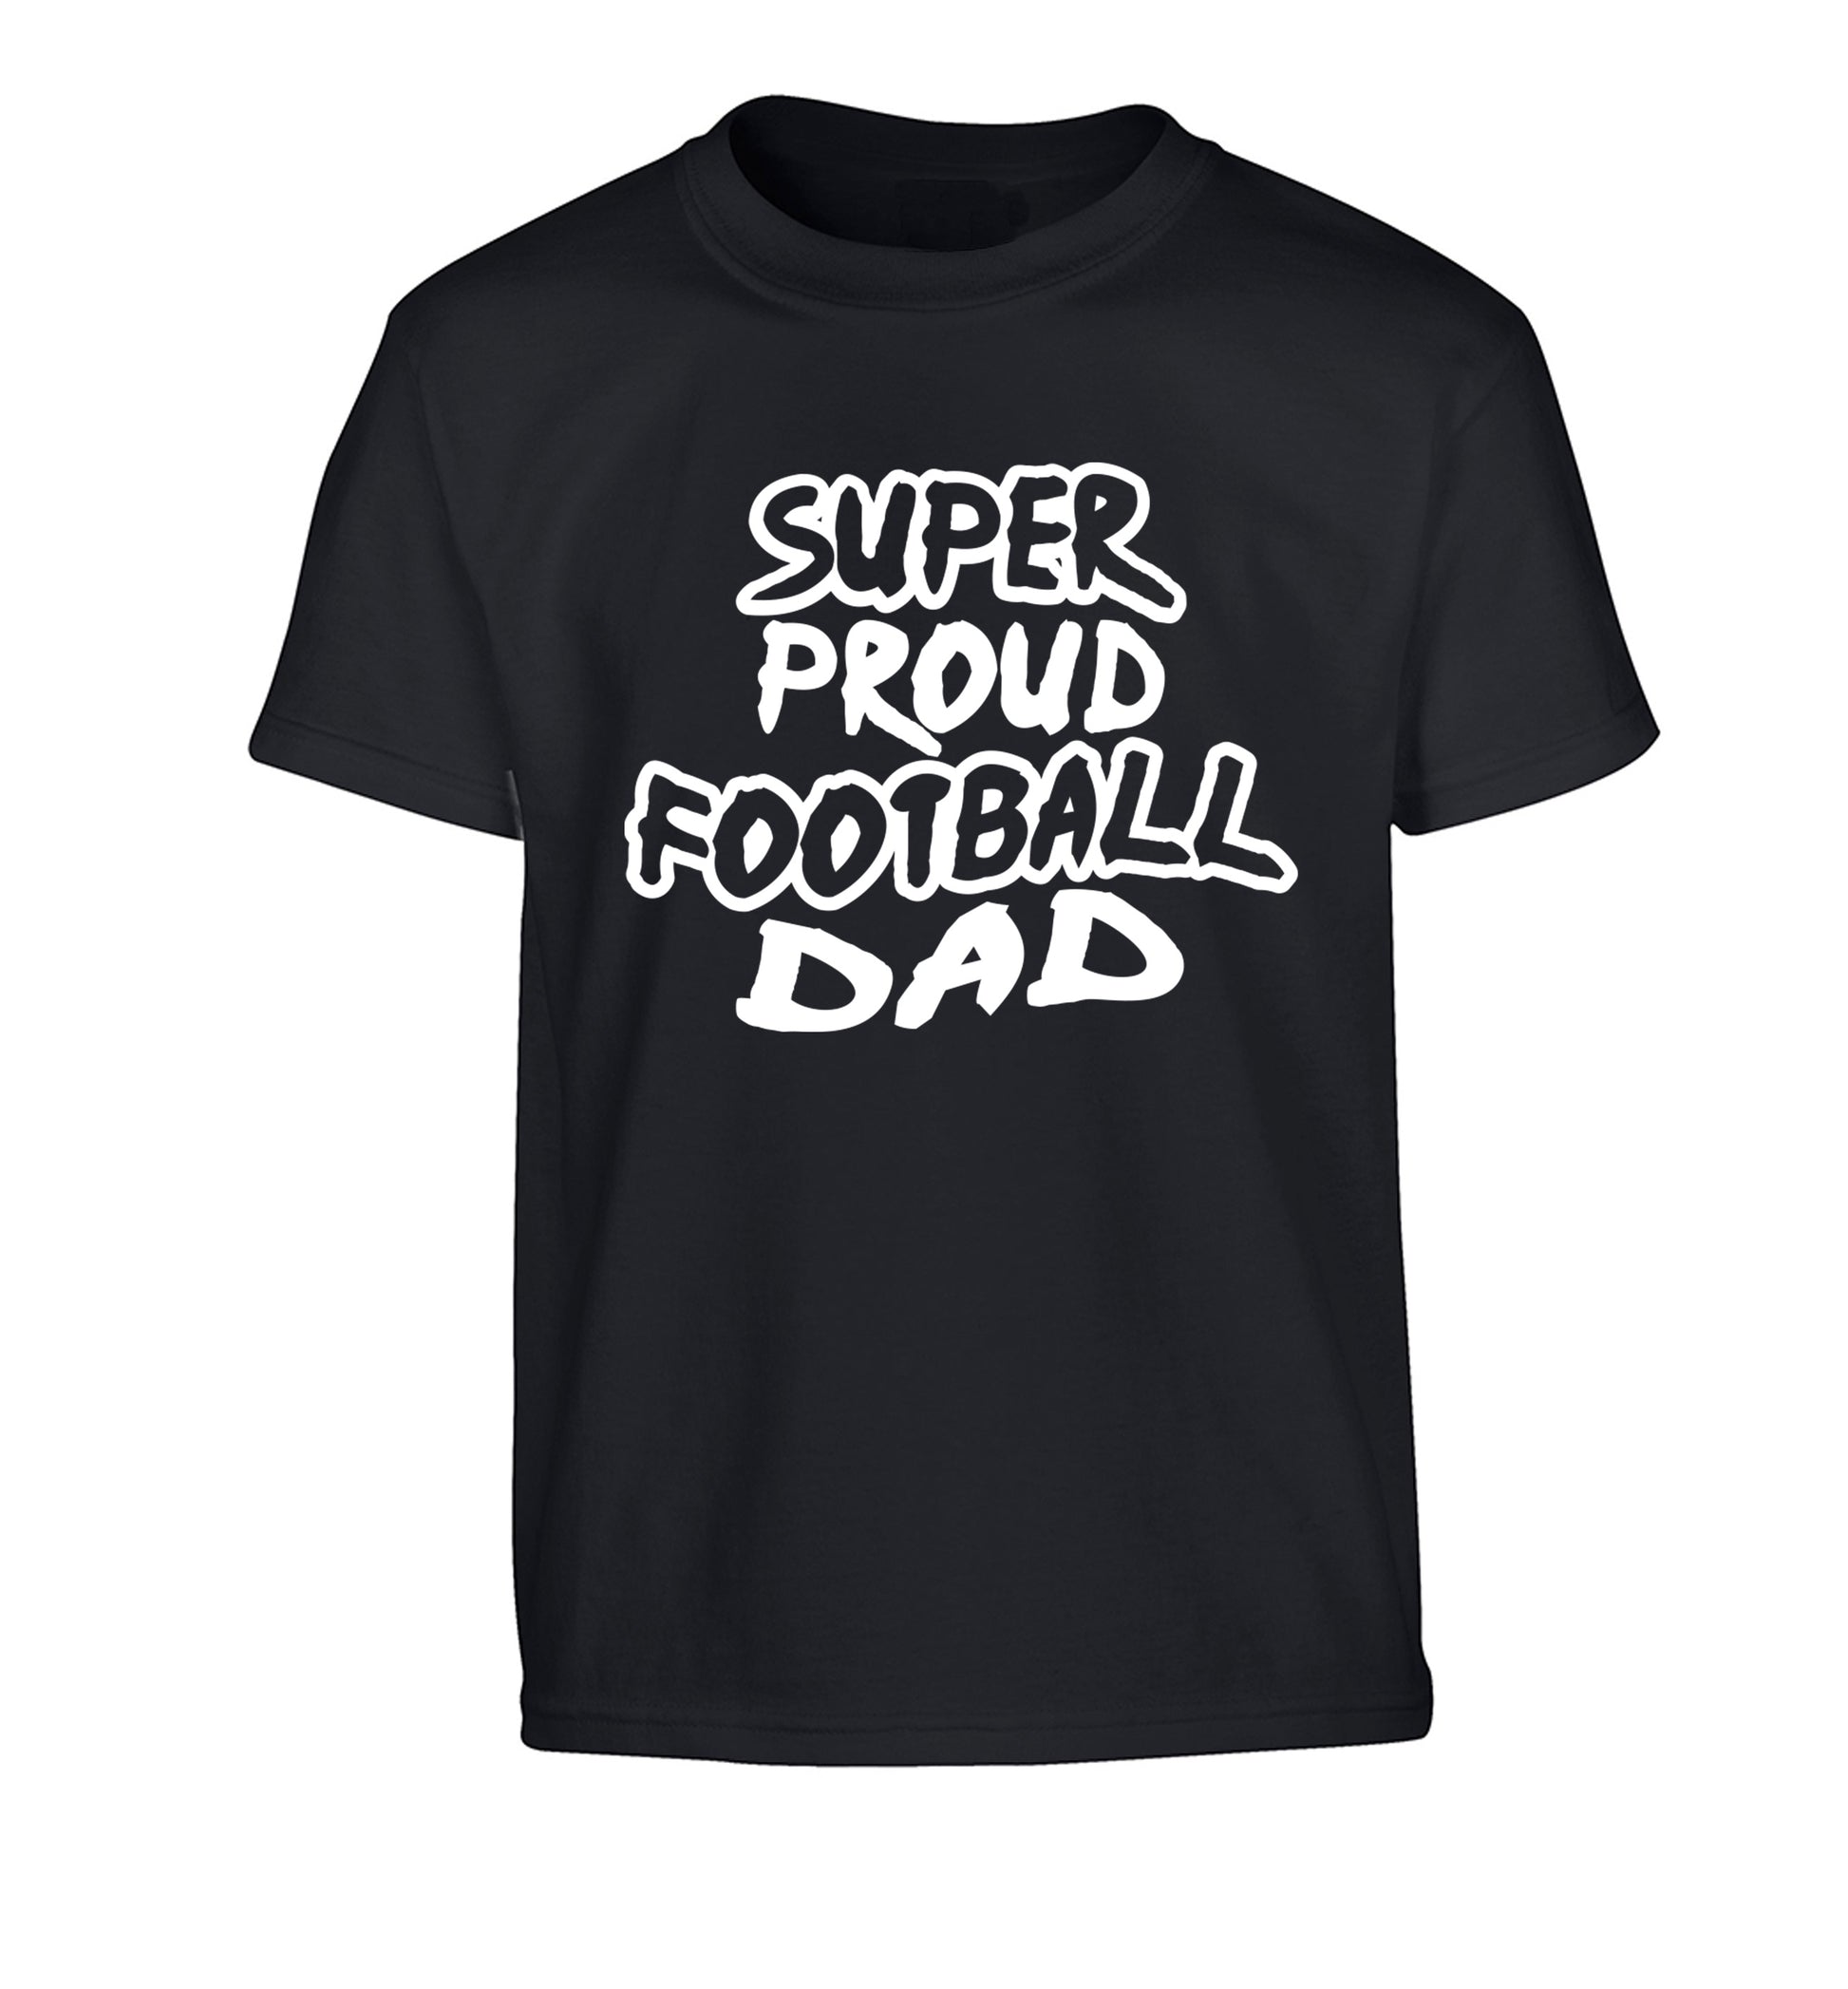 Super proud football dad Children's black Tshirt 12-14 Years